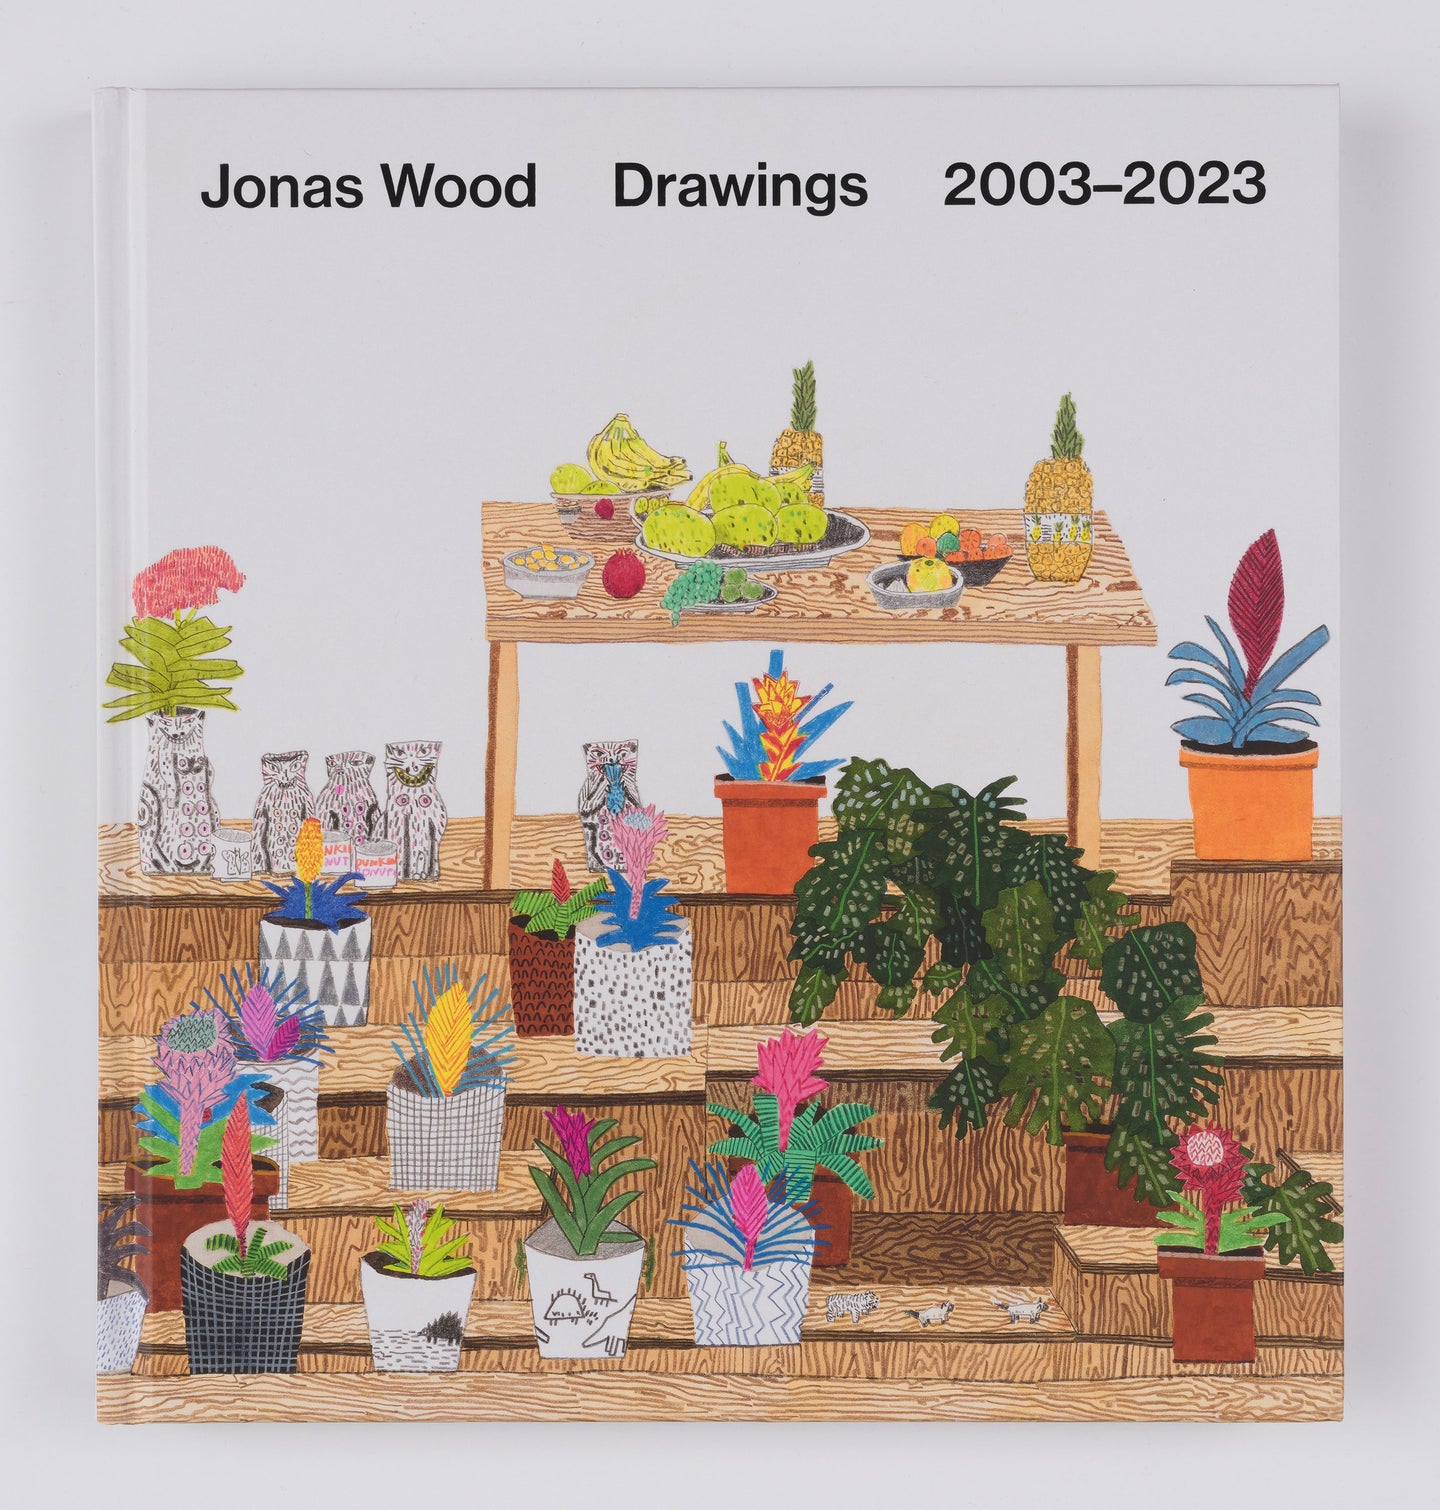 Jonas Wood: Drawings 2003-2023